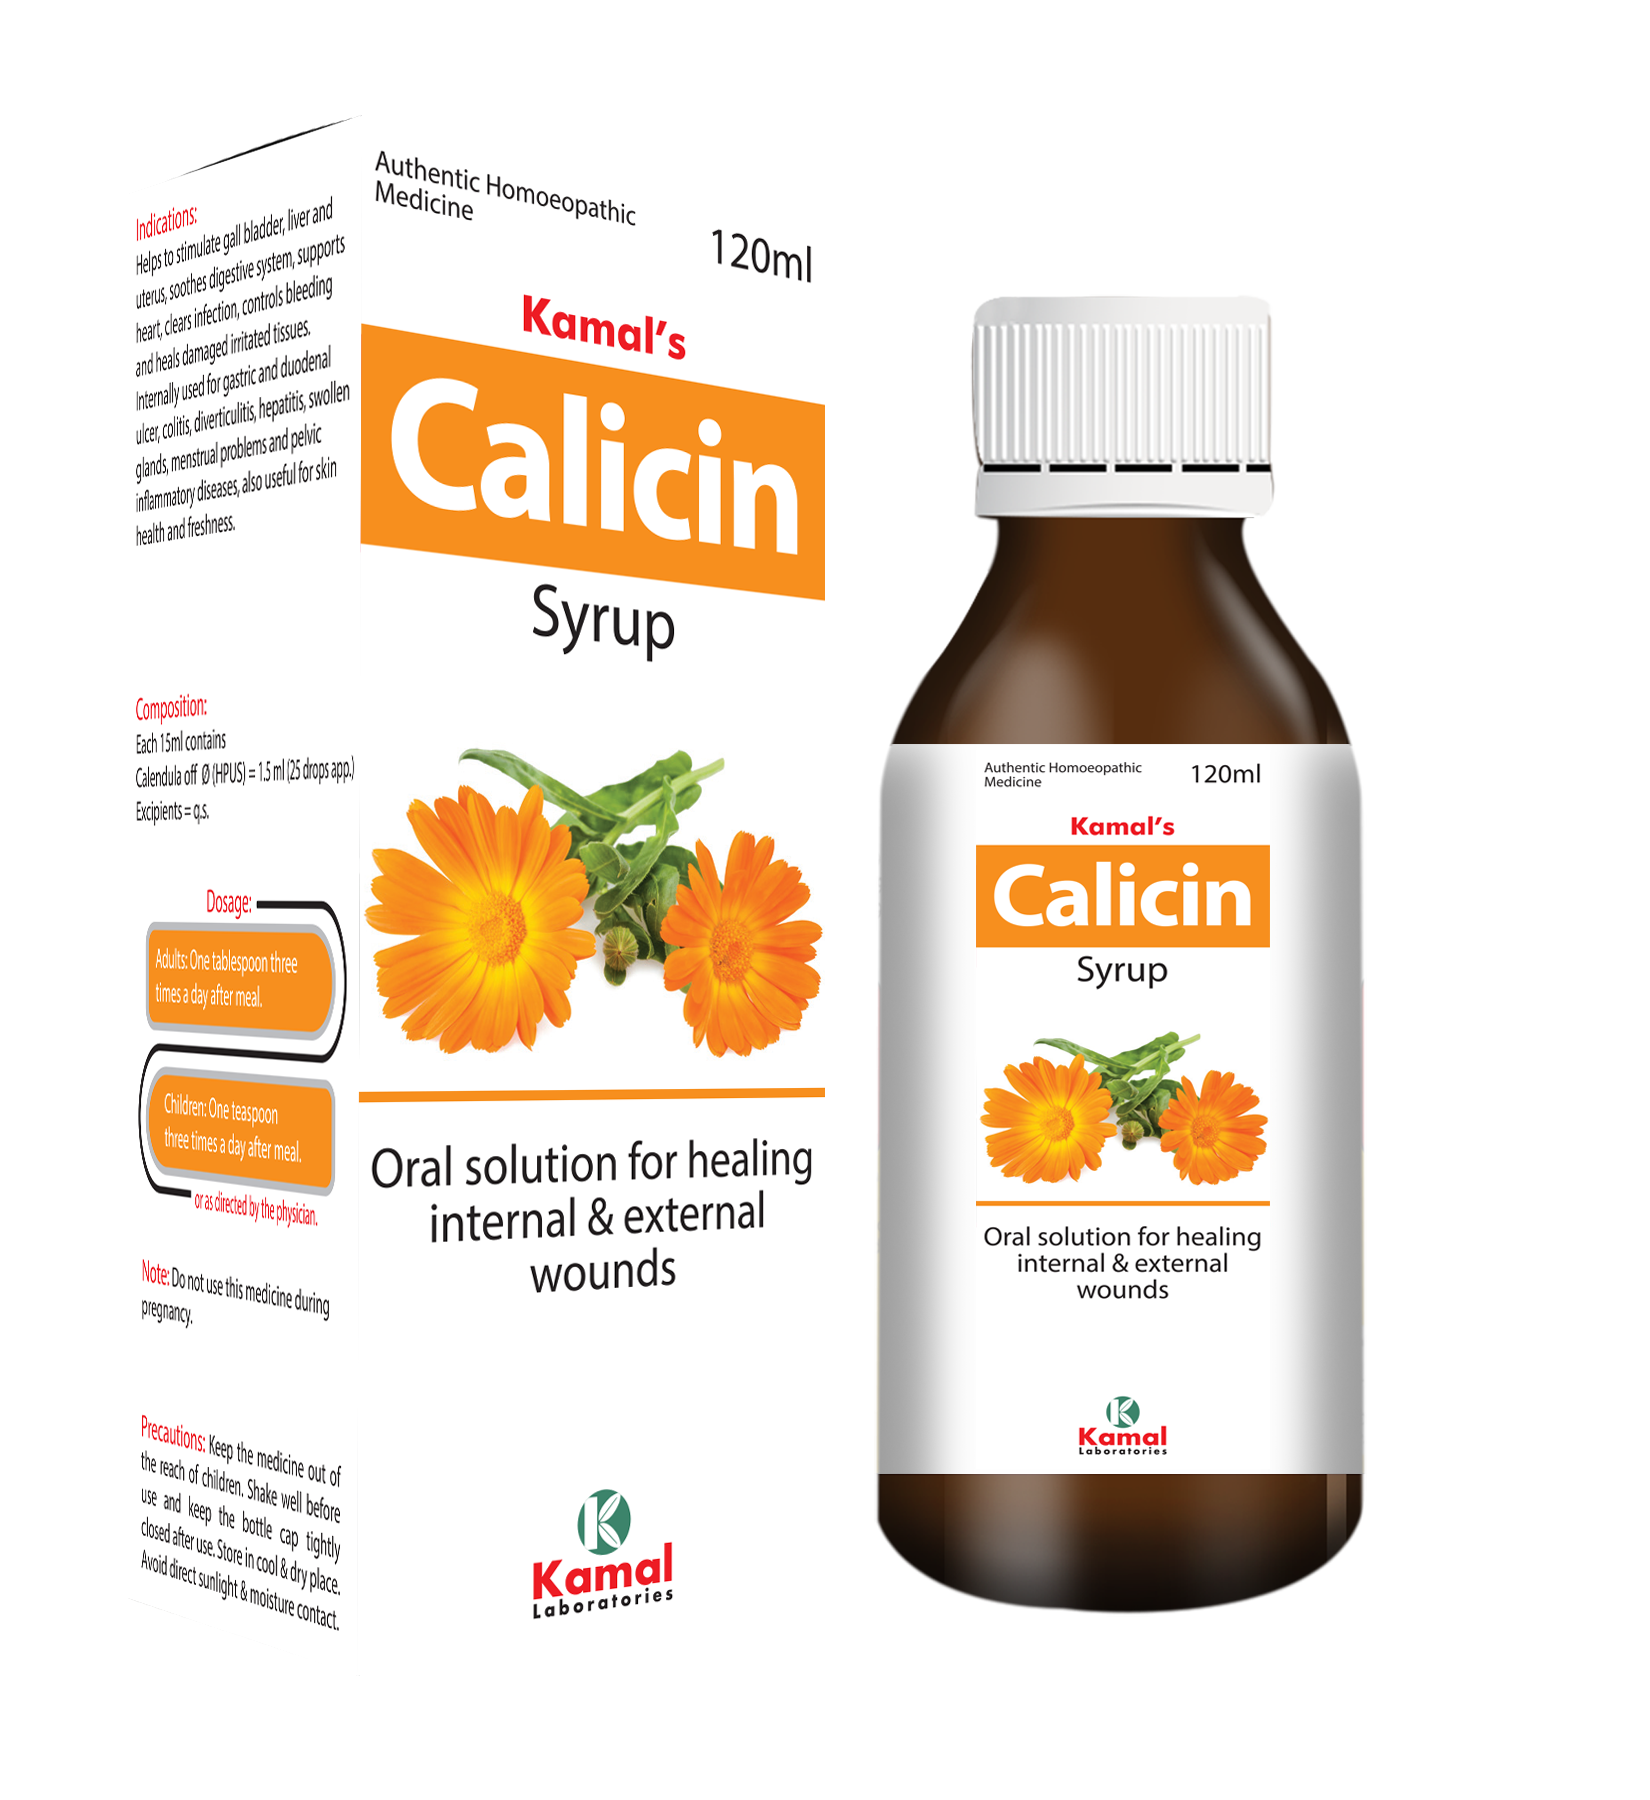 Calicin Syrup